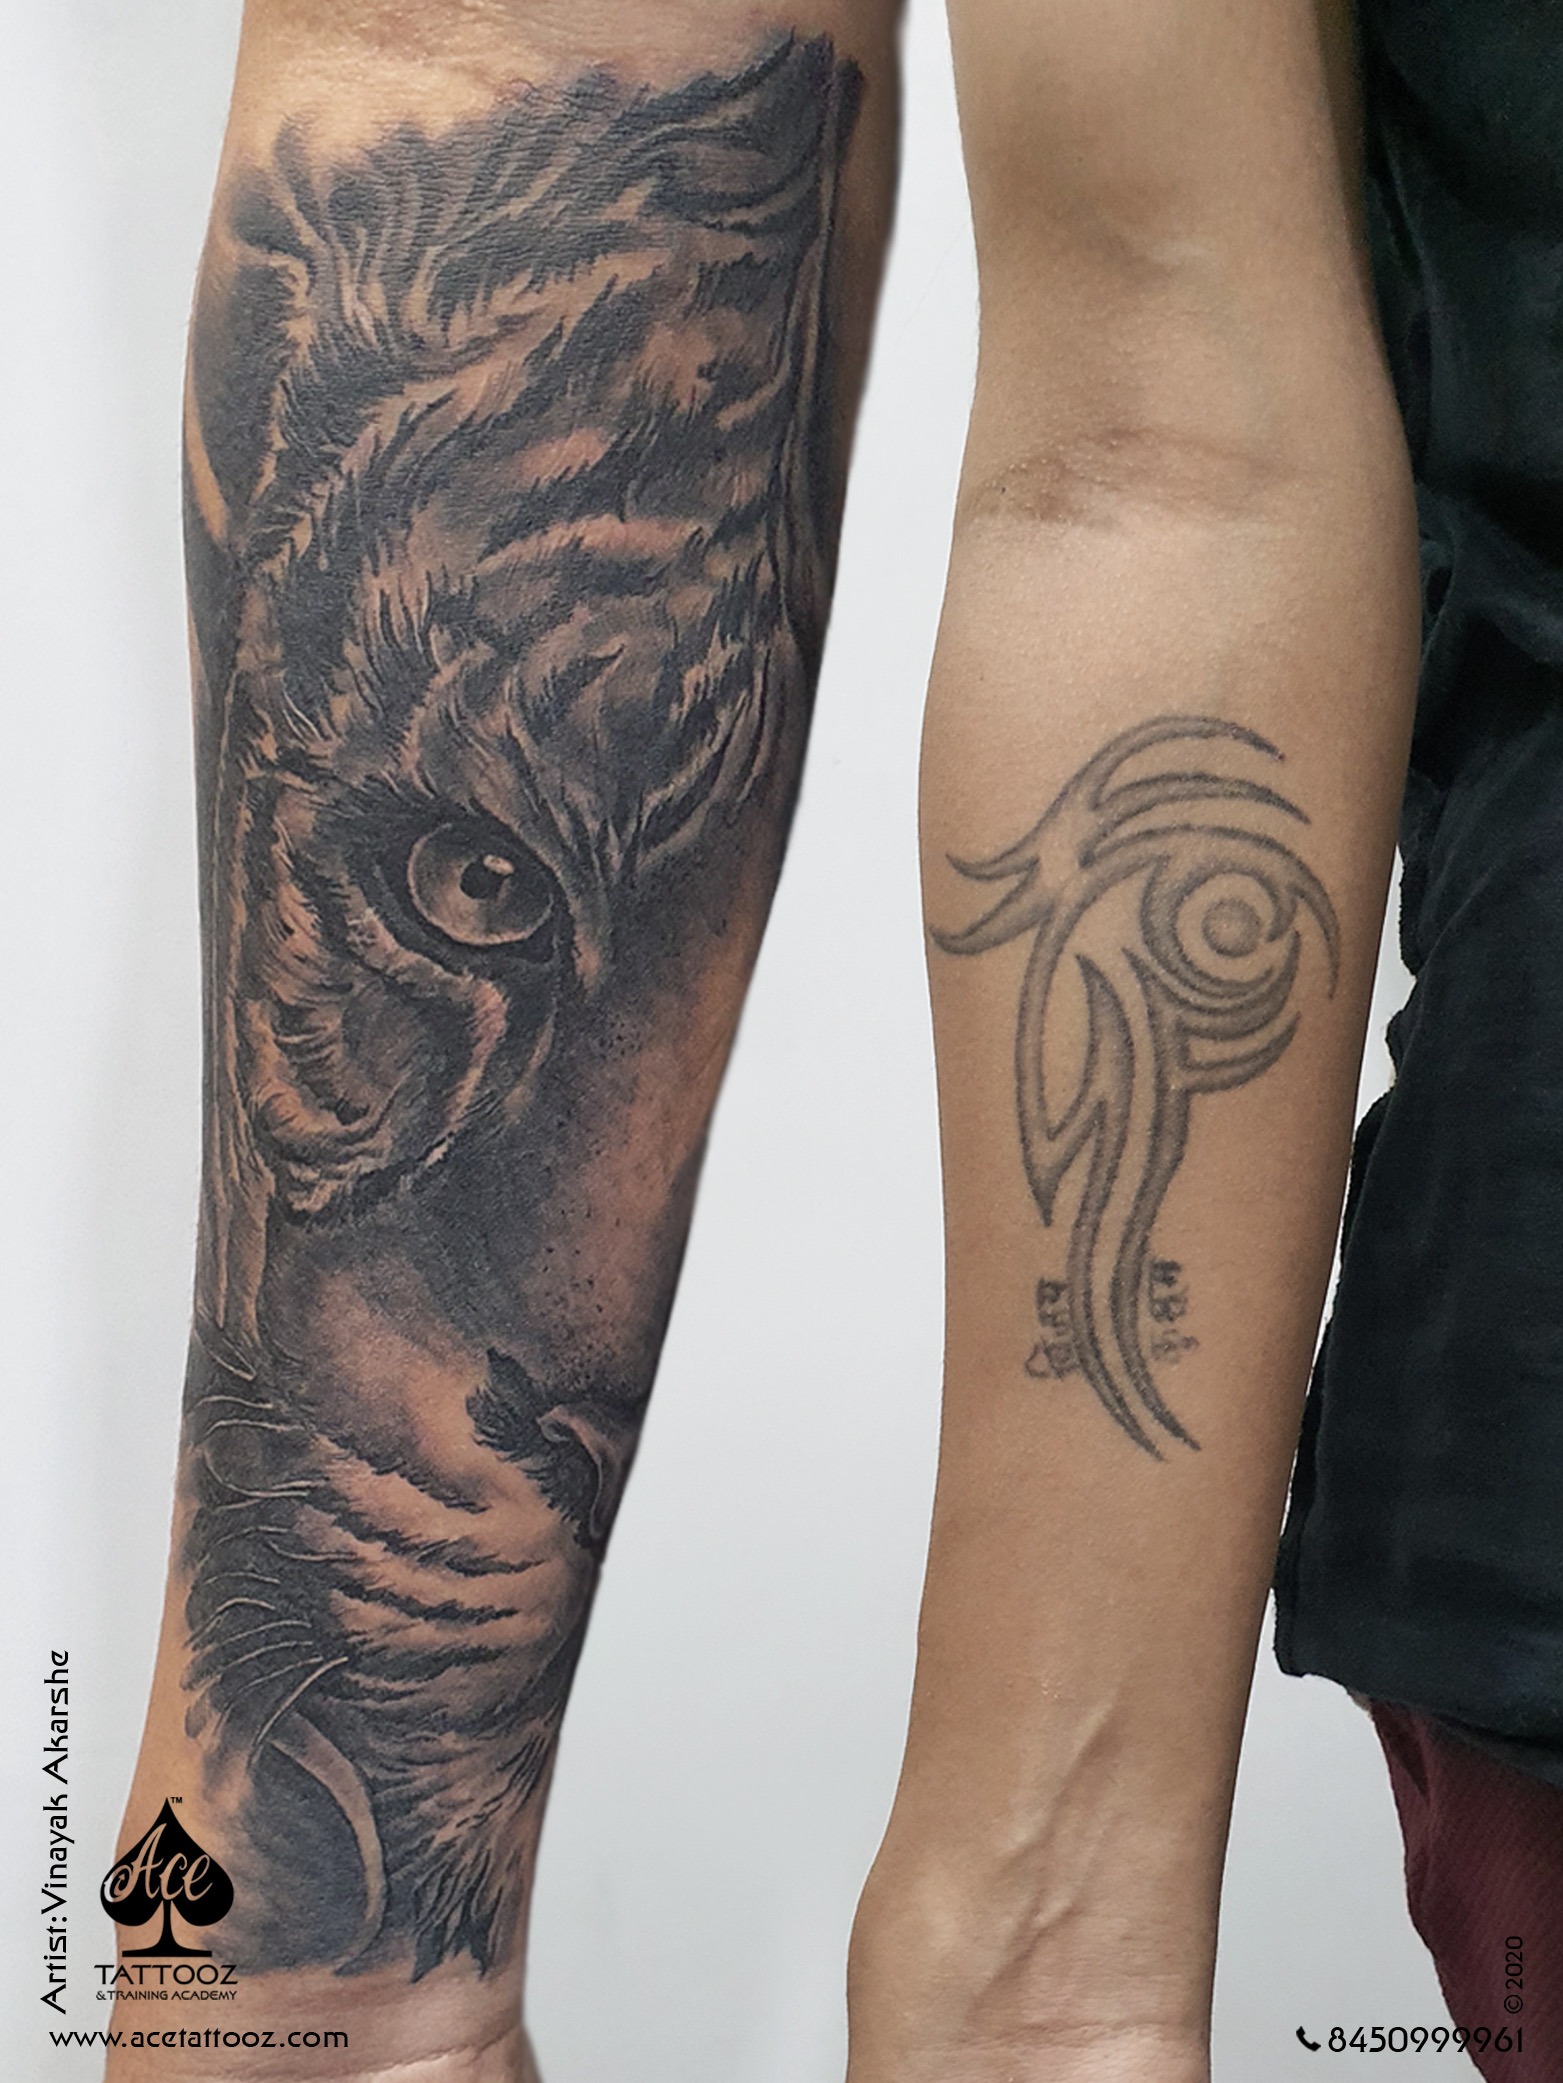 Tiger tattoo sleeve on a woman